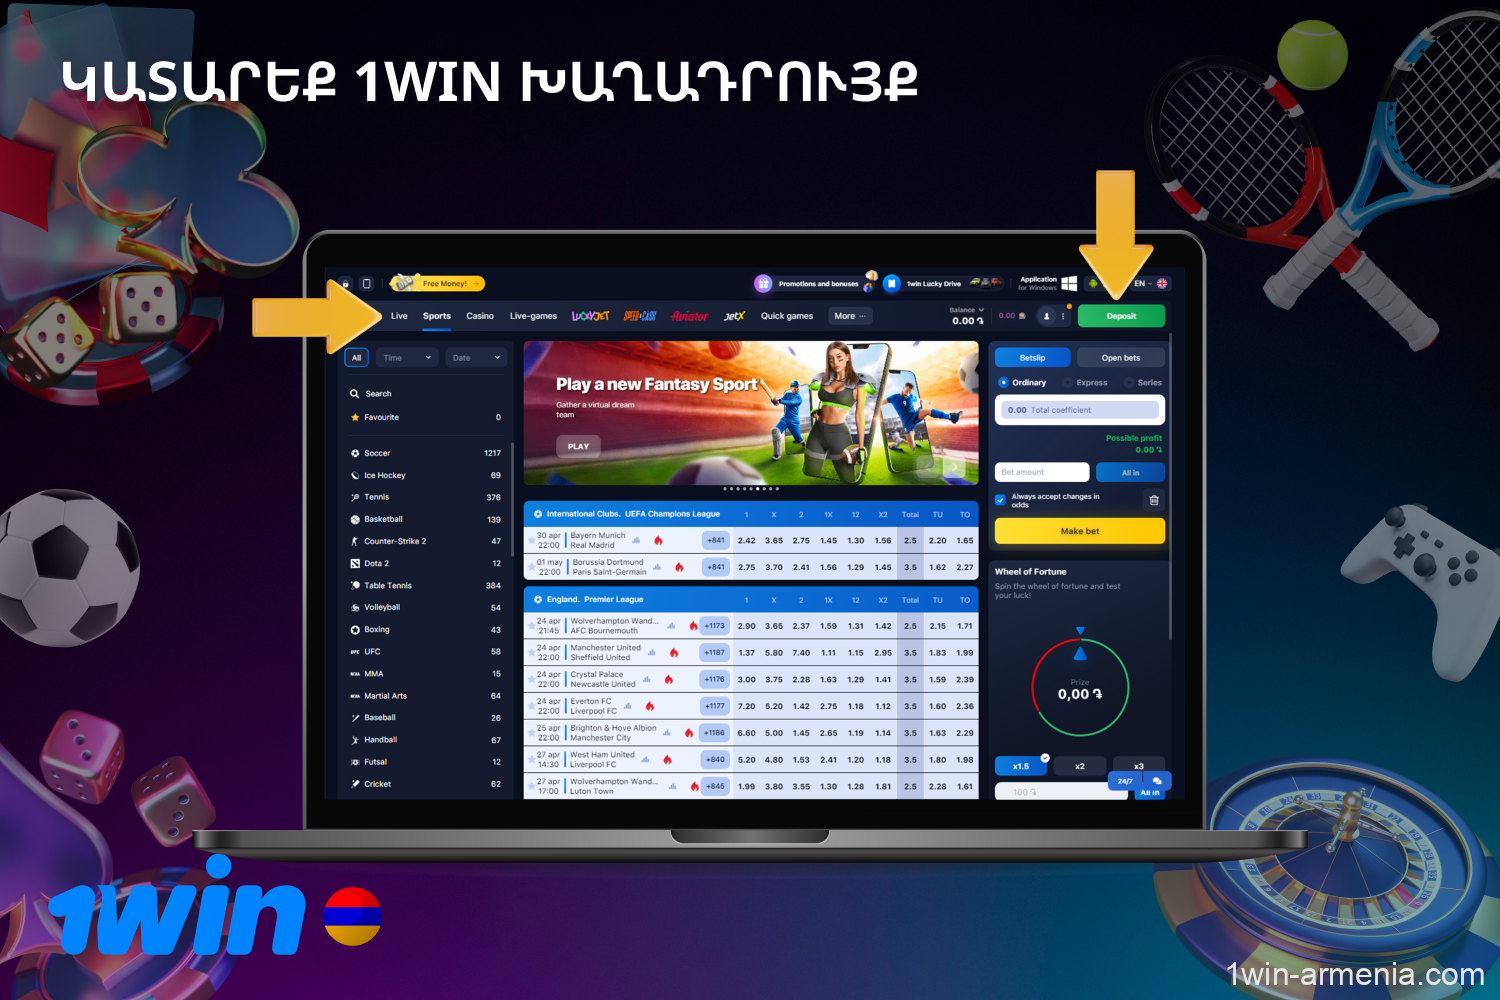 1win-ի վրա խաղադրույք կատարելու համար հայ խաղացողները պետք է խաղատան կամ սպորտի բաժնում ընտրեն խաղ, նշեն խաղադրույքի գումարը և հաստատեն խաղադրույքը